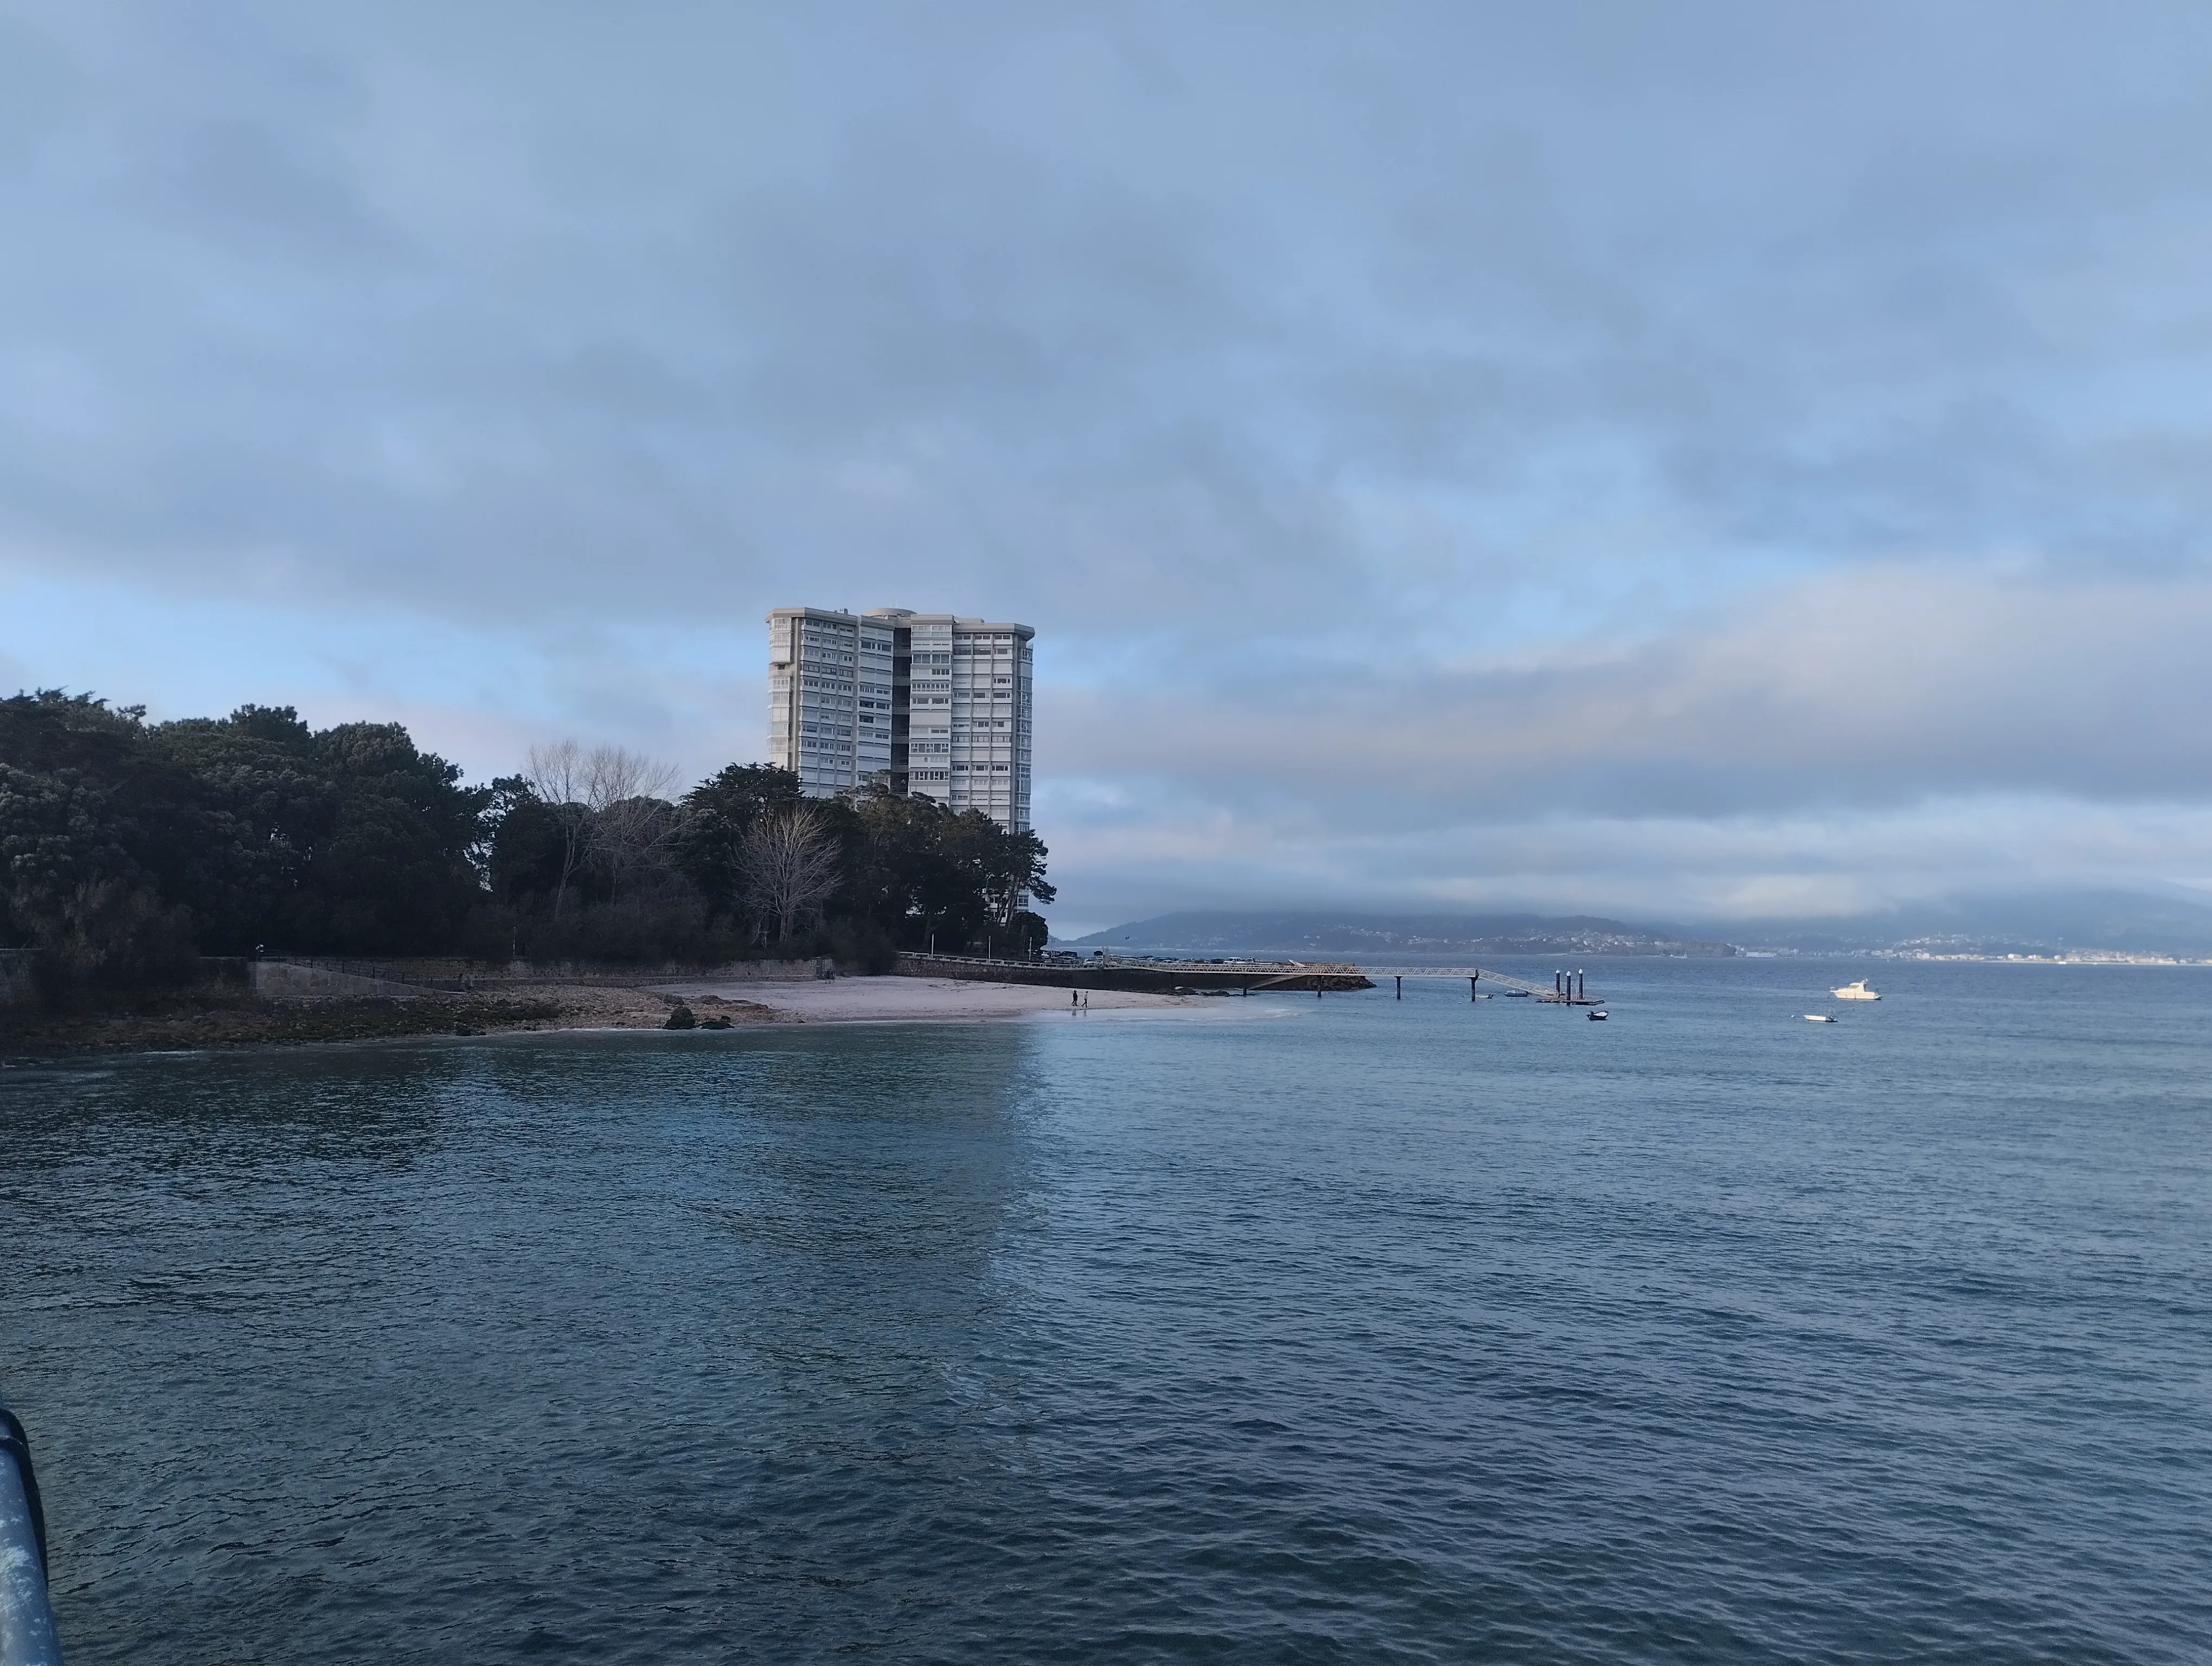 Vista de la playa pública de la isla, con la torre de viviendas al fondo